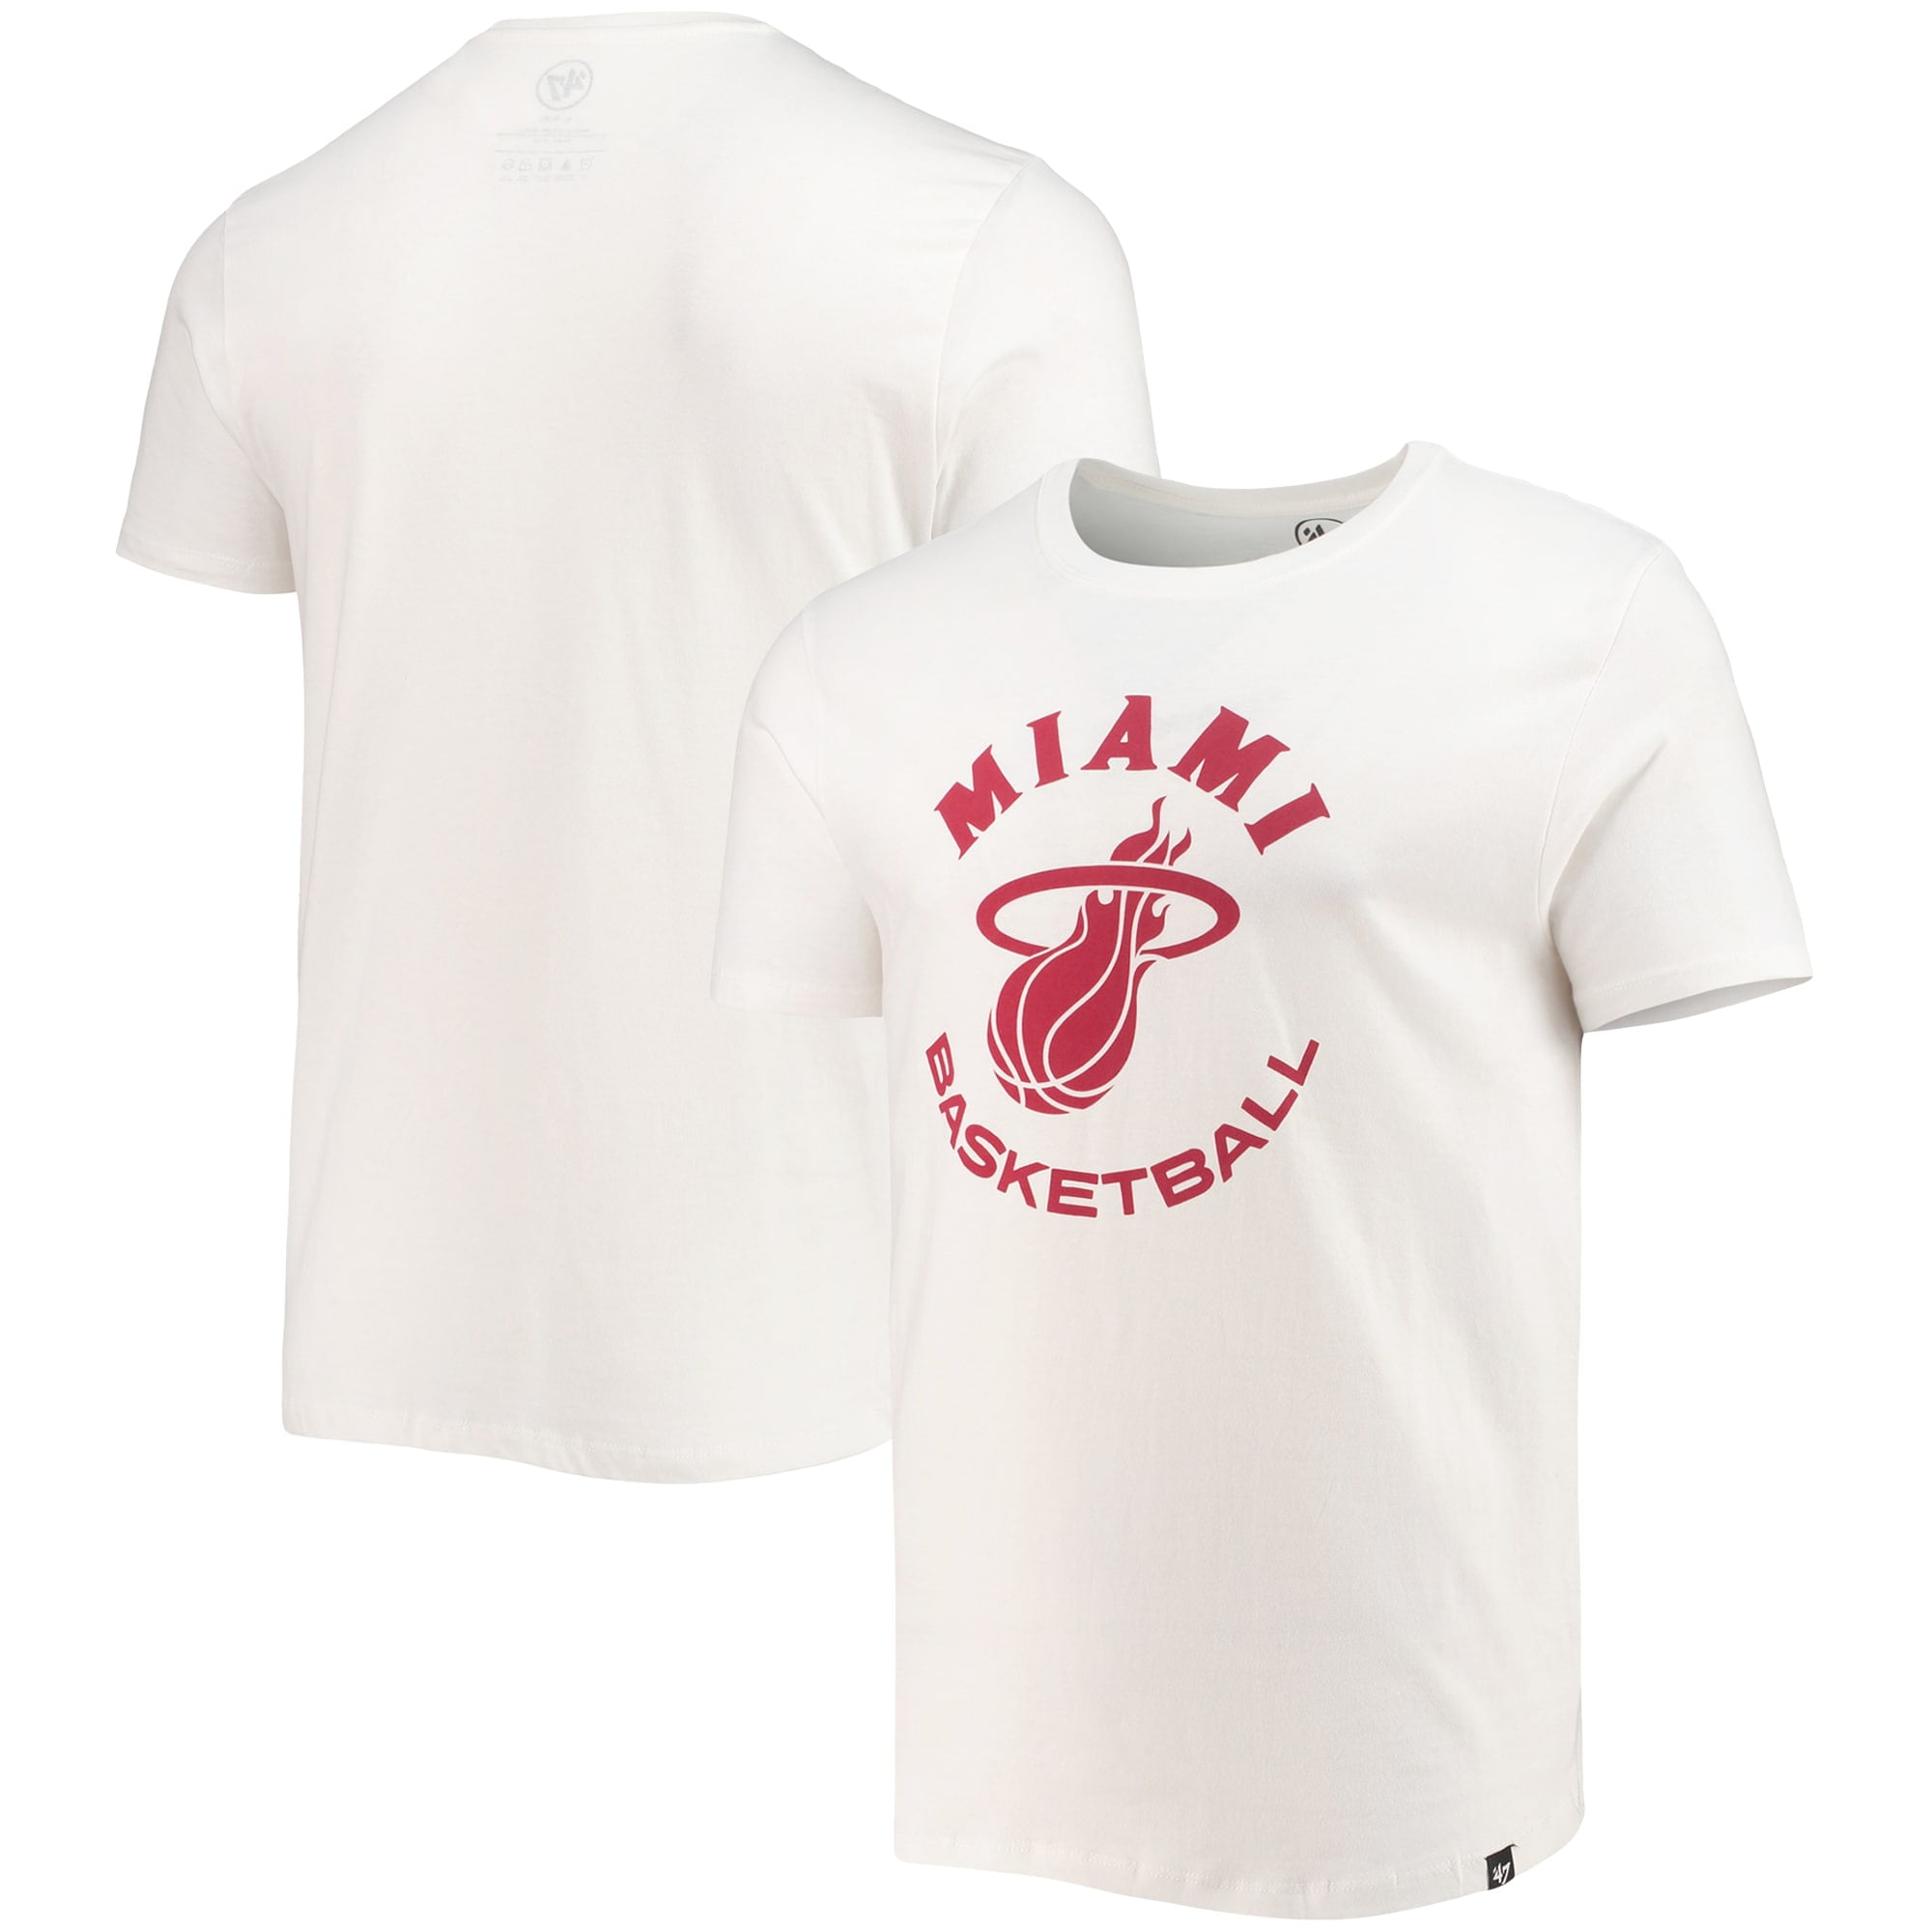 Miami Heat T-Shirt Vintage Clothes Boys White T Shirts T Shirts Men